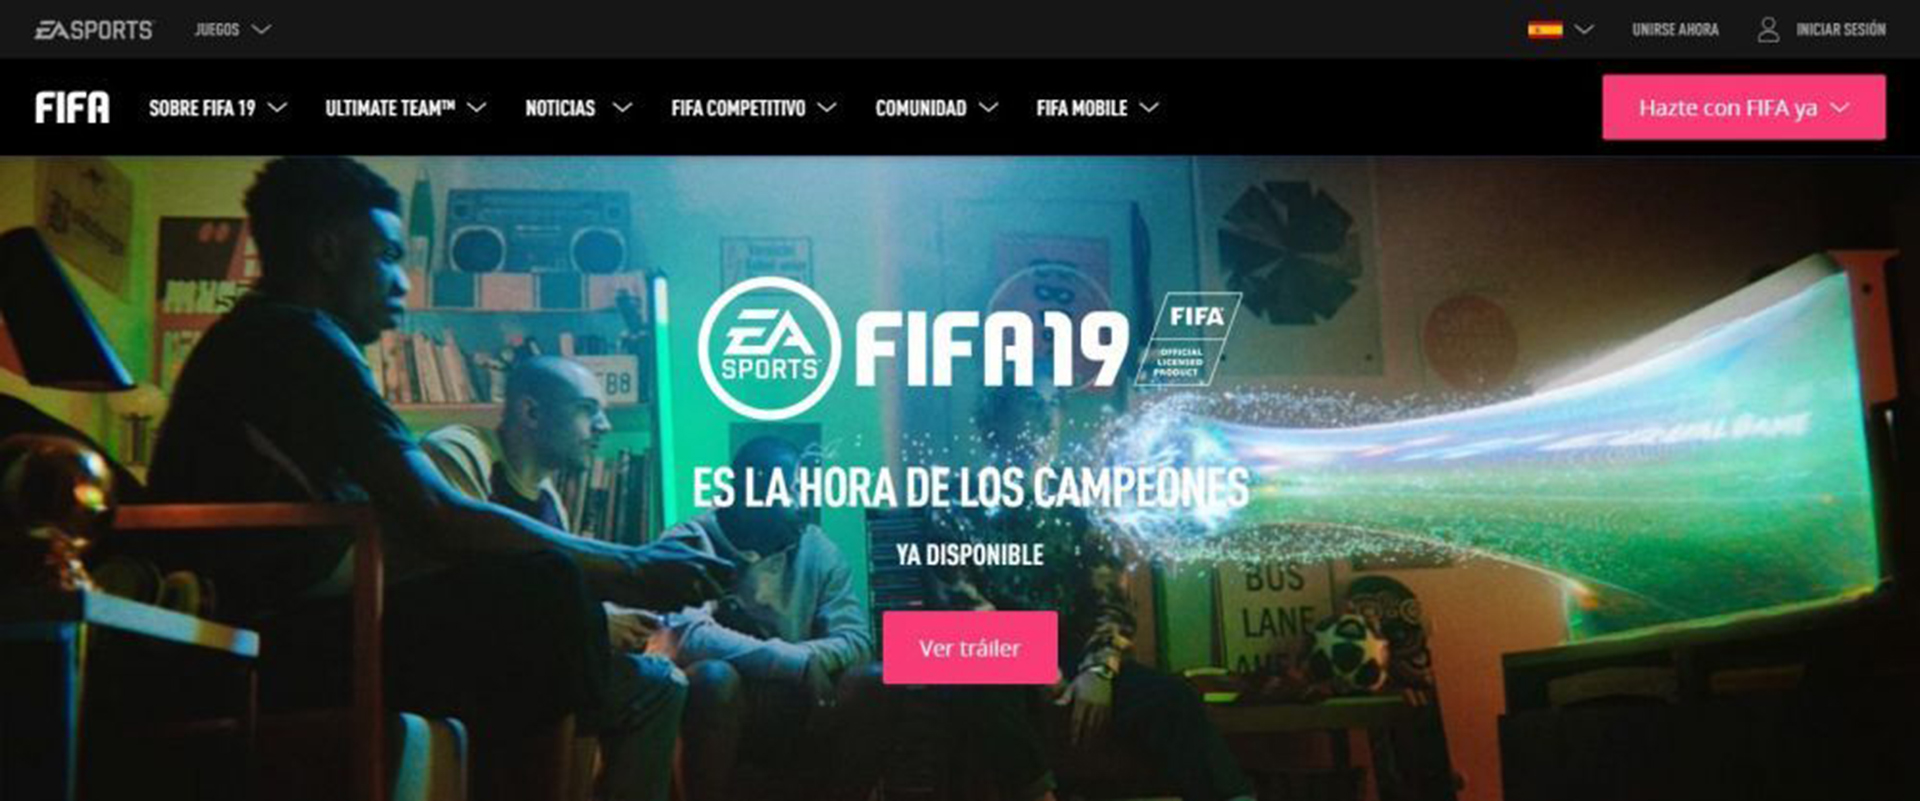 EA Sports imagen de referencia FIFA 19 (Foto: Archivo/EA Sports)